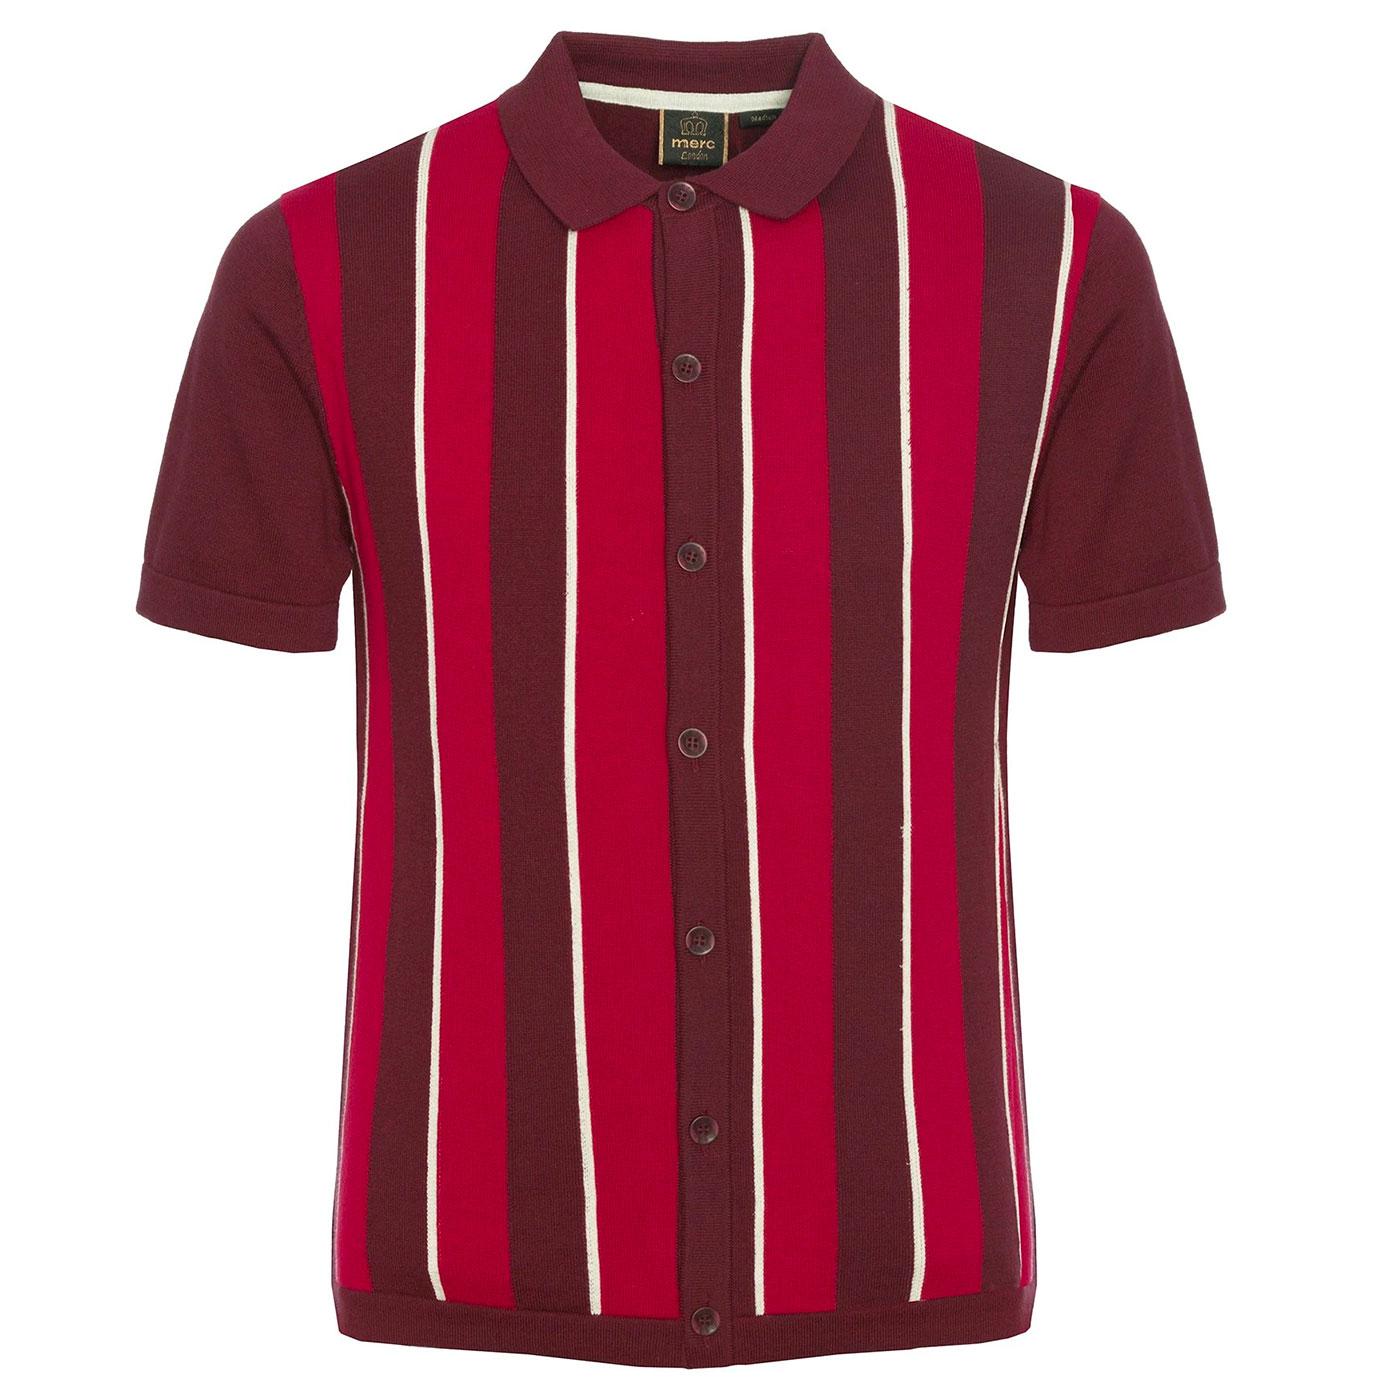 Ravendale MERC Retro 50s Striped Knitted Shirt M 